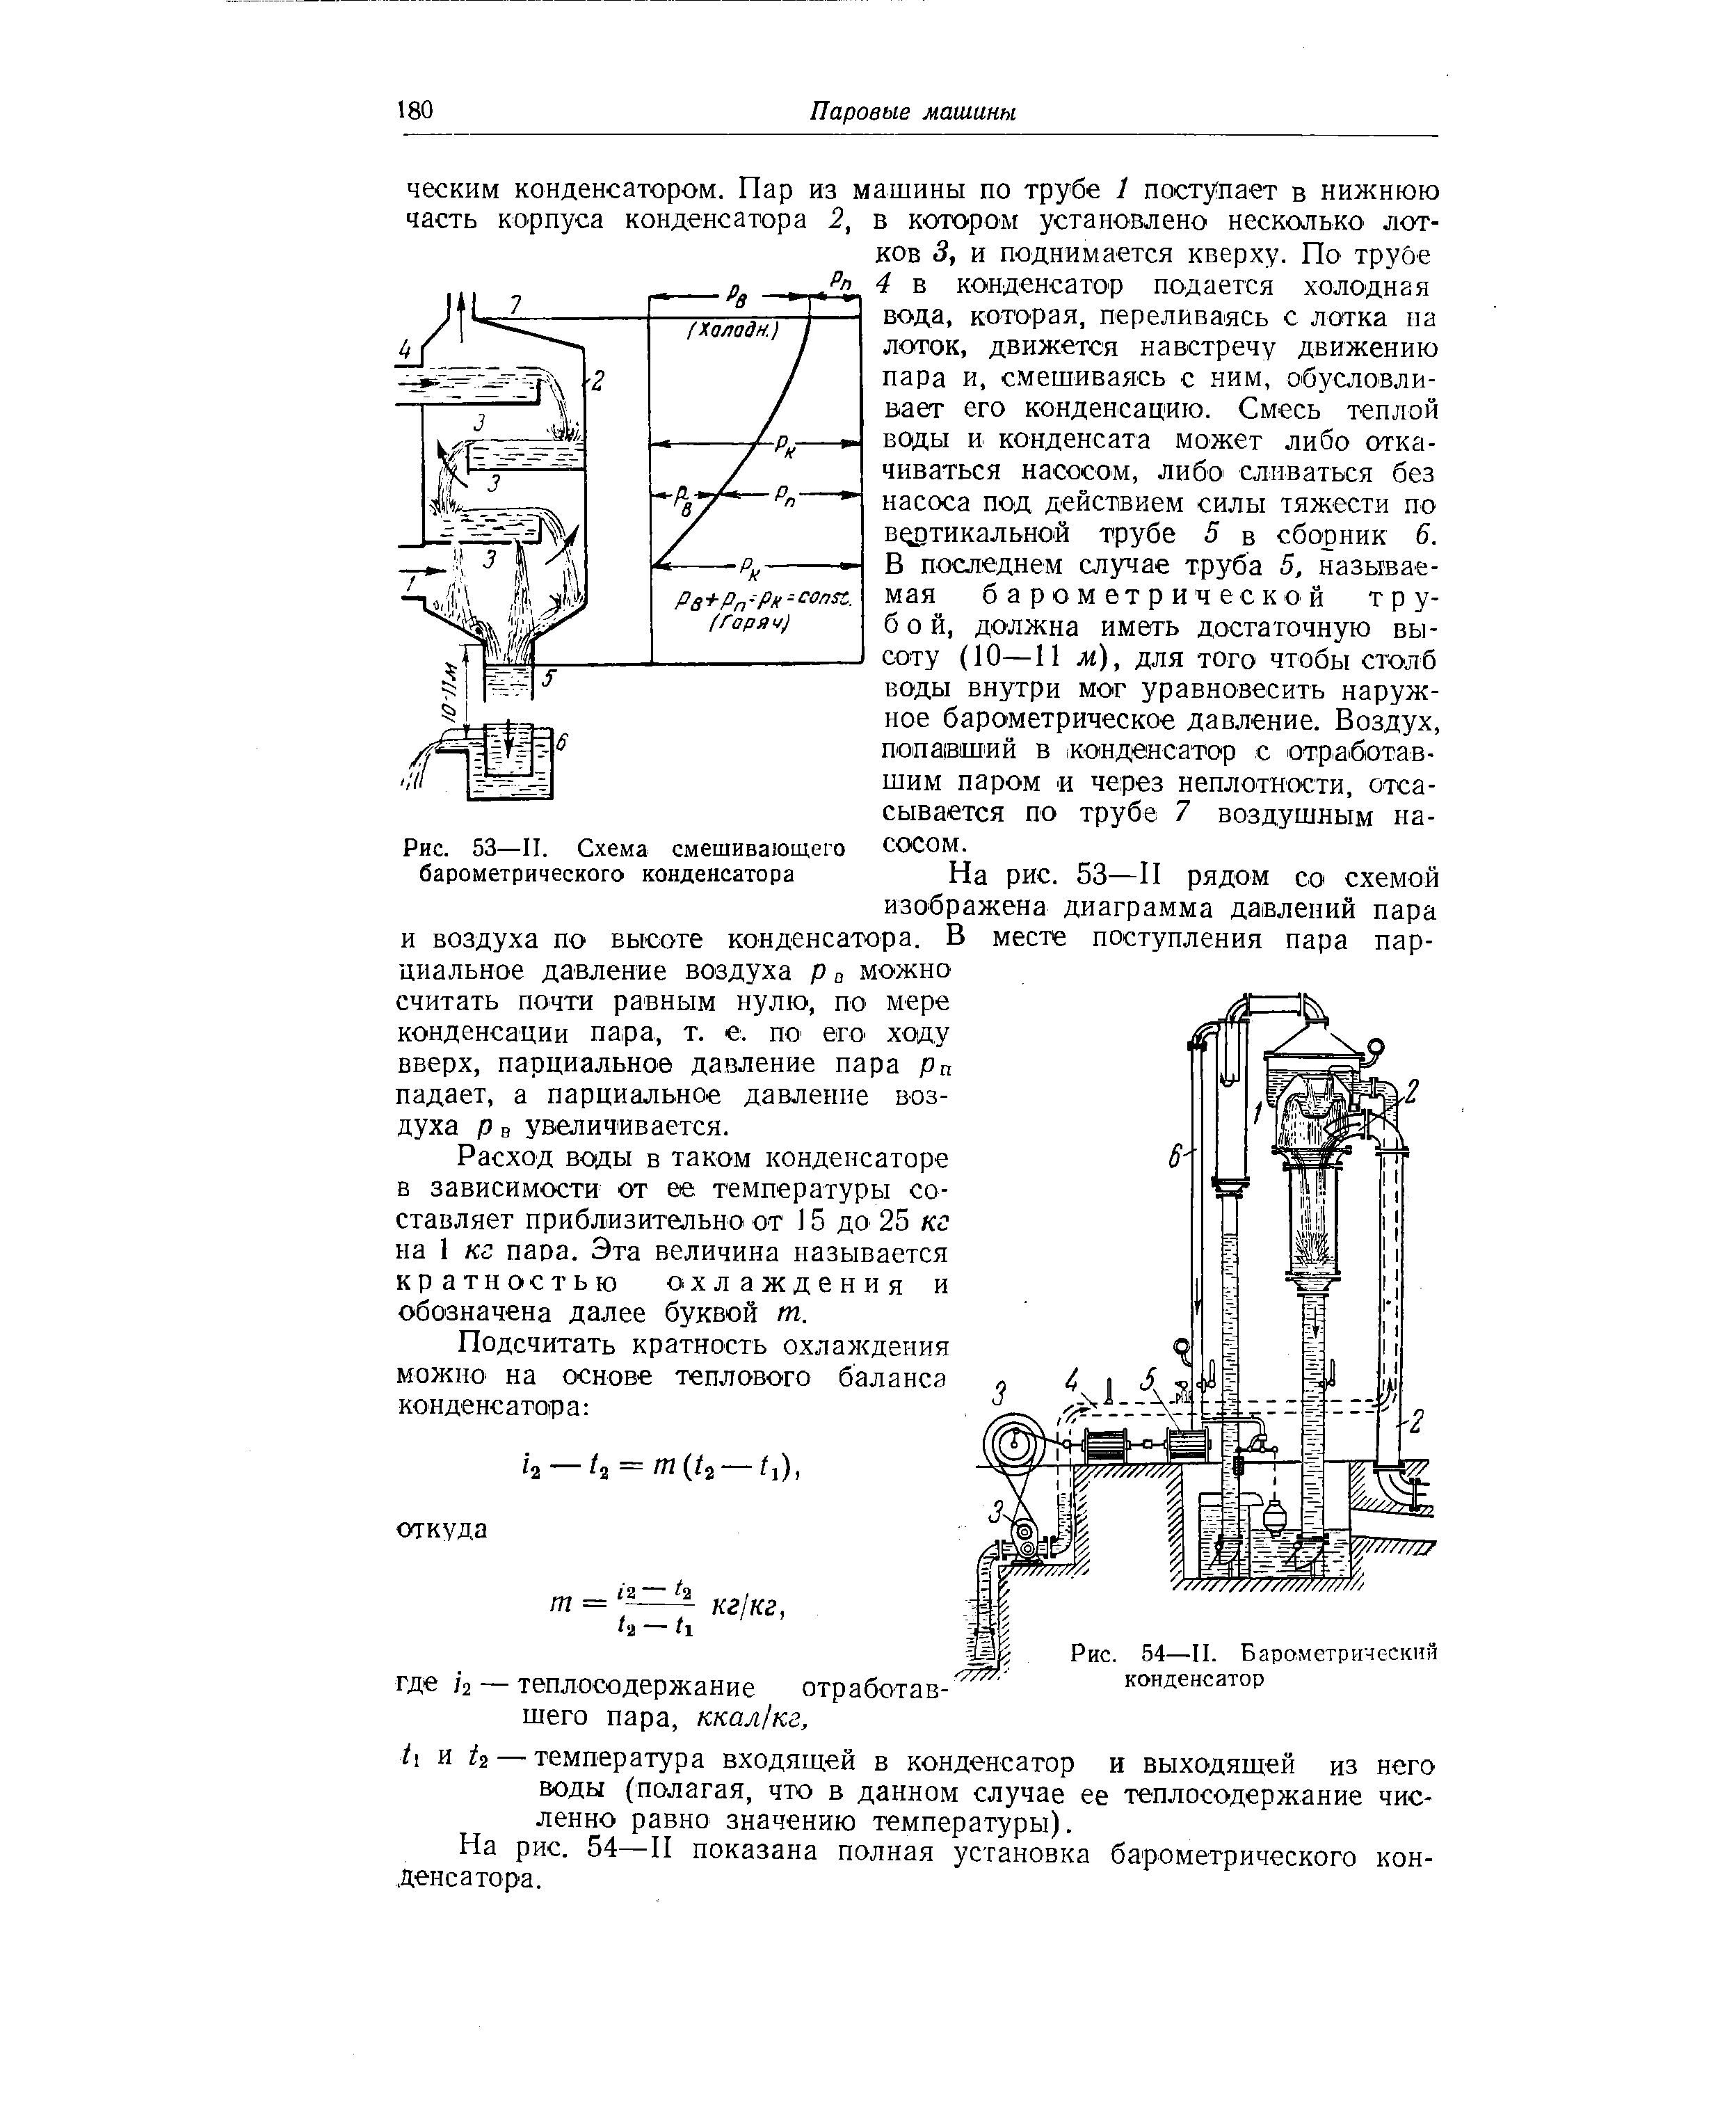 Рис. 53—II. Схема смешивающего барометрического конденсатора
